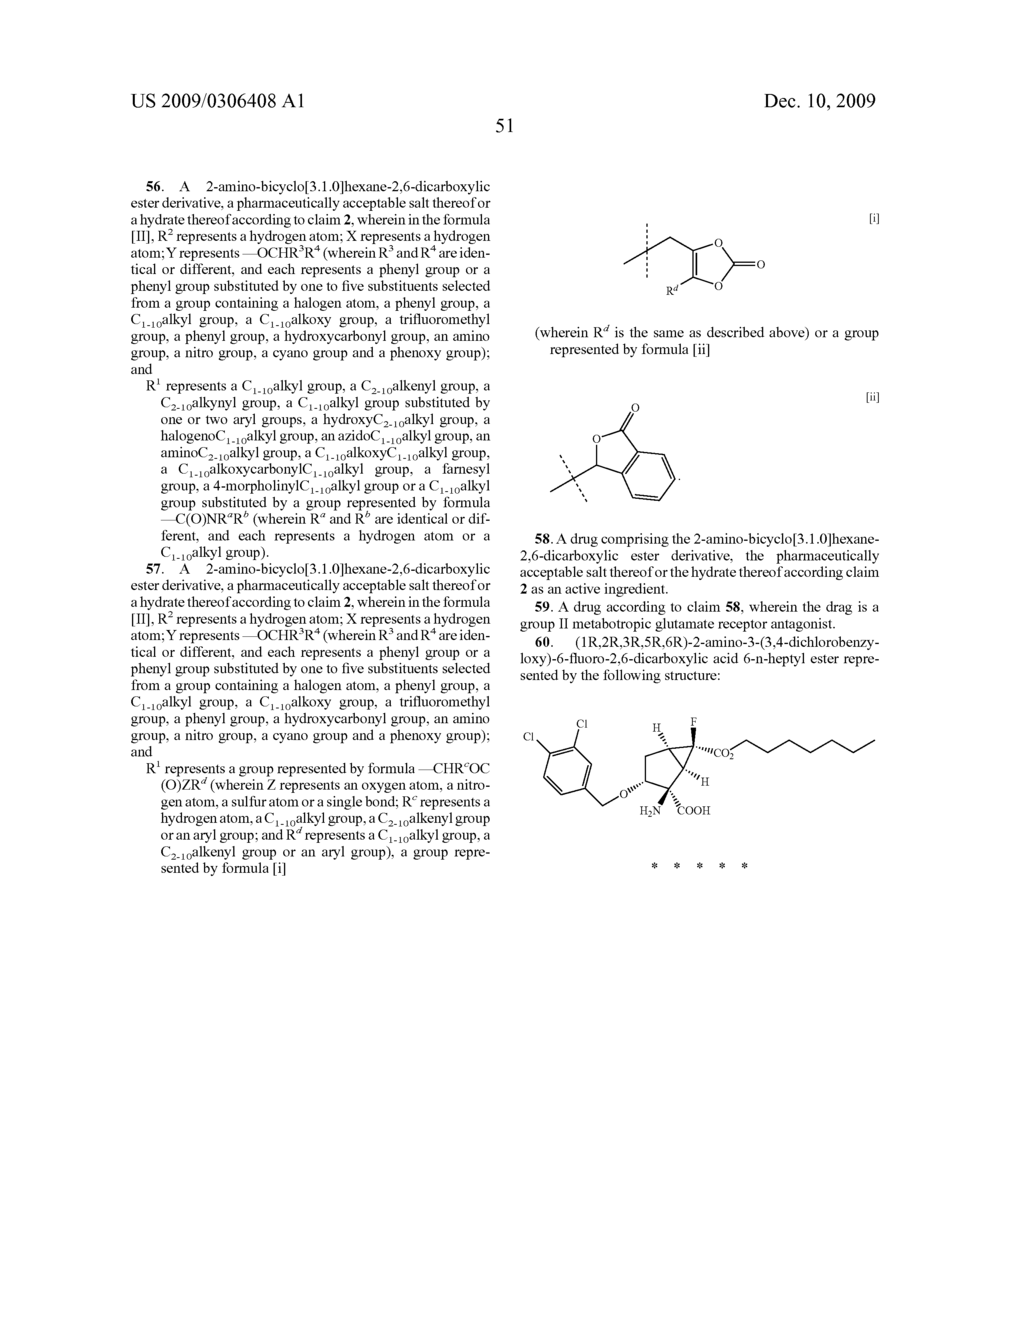 2-Amino-Bicyclo (3.1.0) Hexane-2,6-Dicarboxylic Ester Derivative - diagram, schematic, and image 52